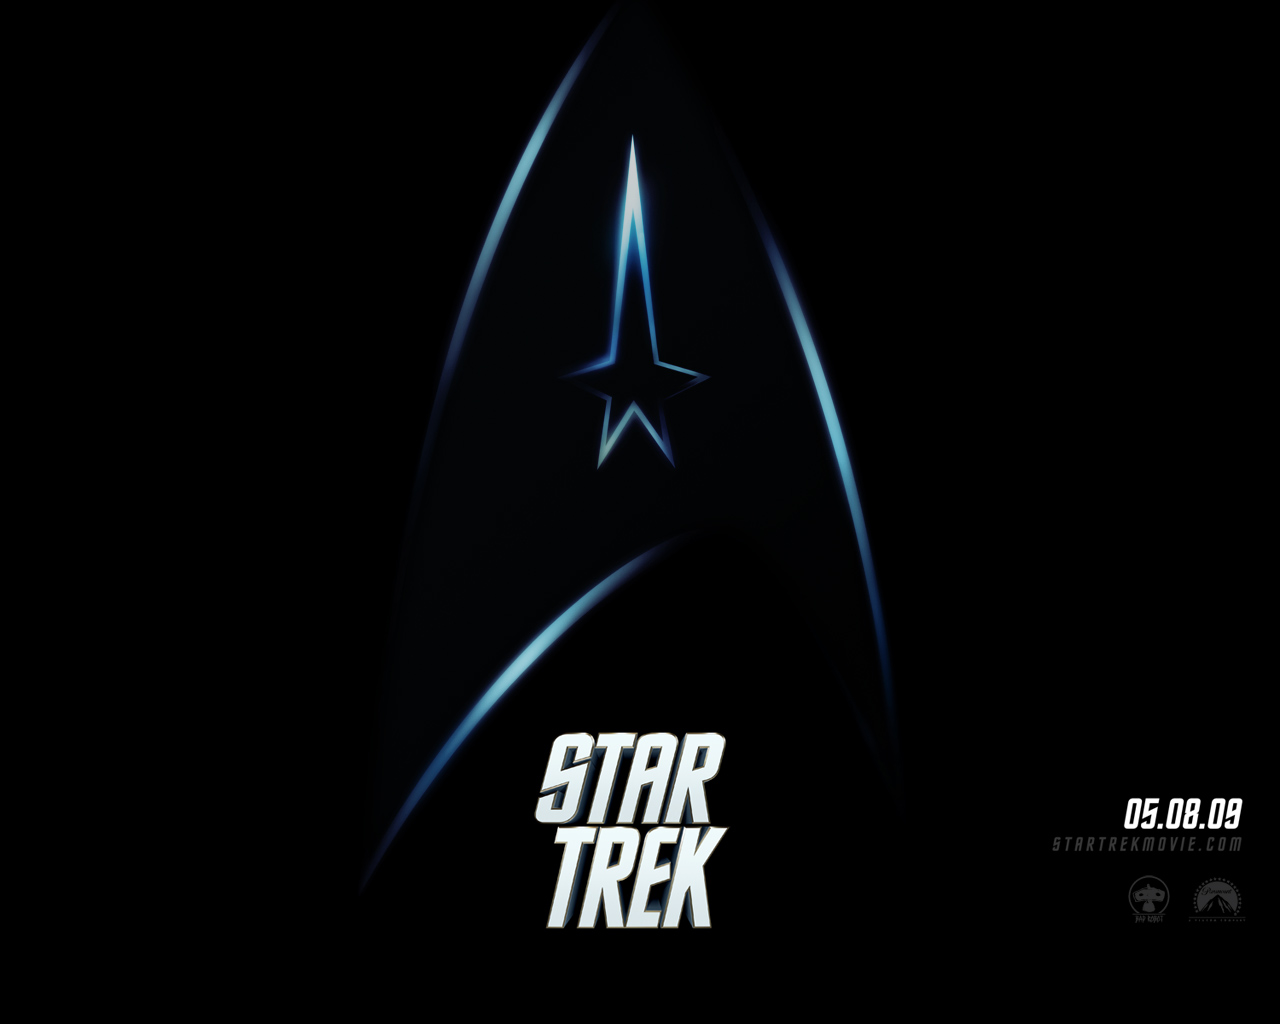 Star Trek Wallpaper For iPhone Imagebank Biz